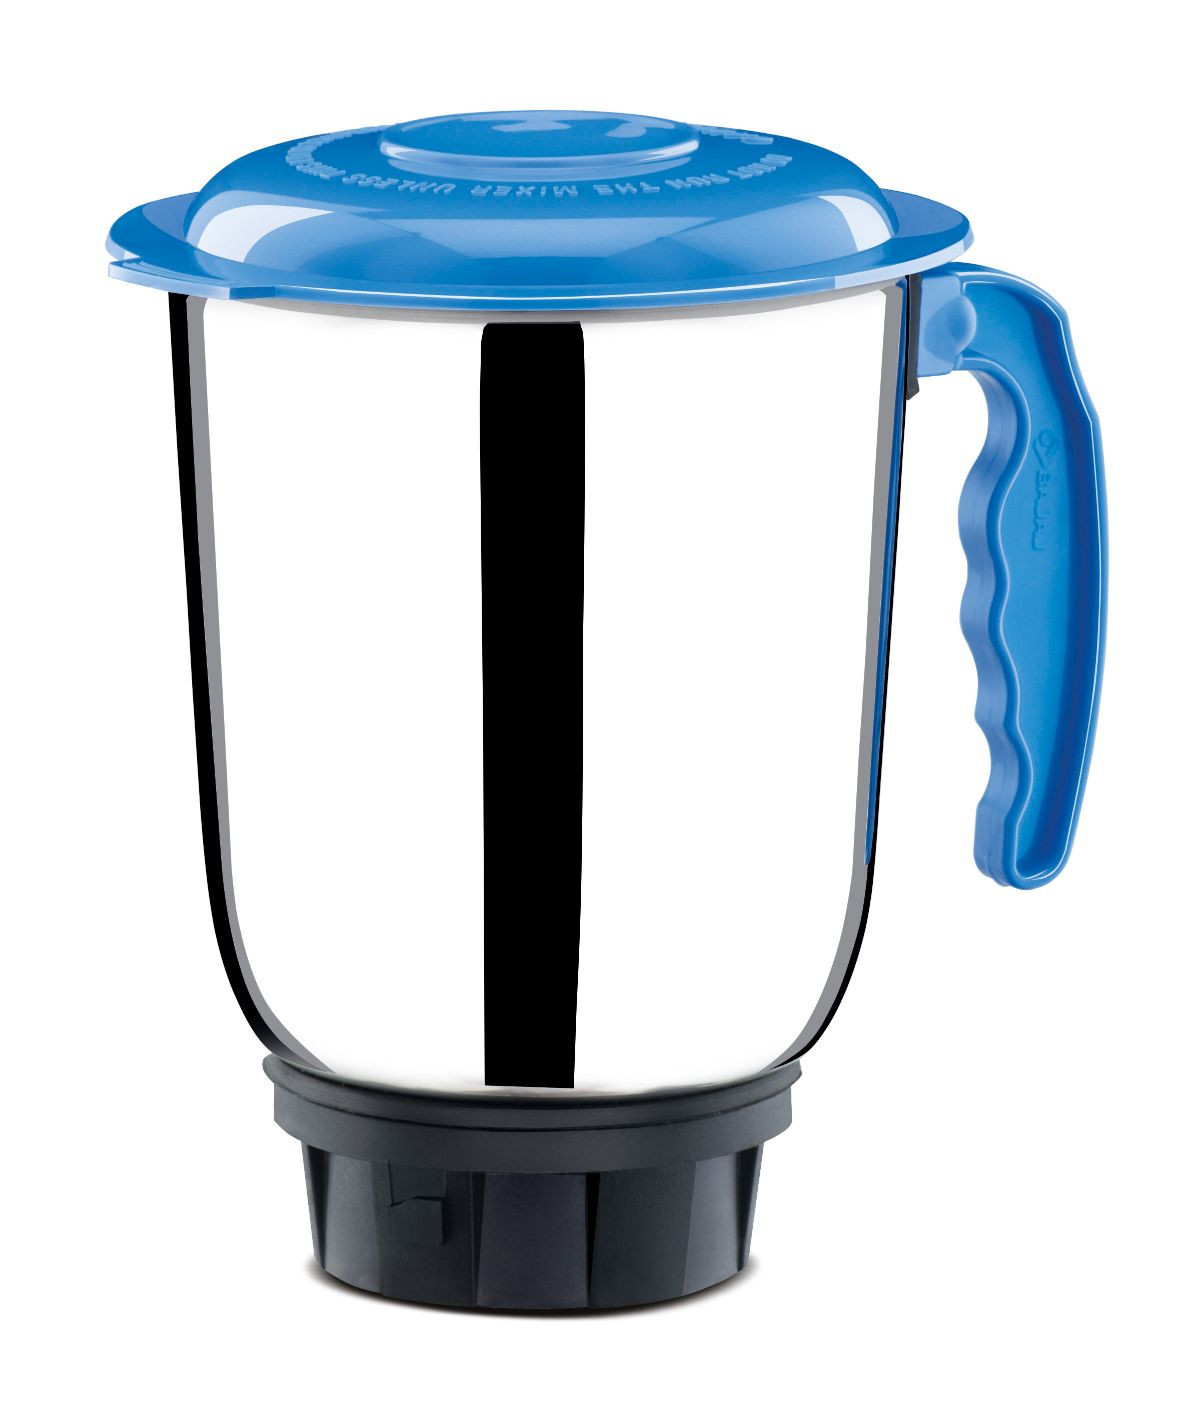 bajaj-bravo-dlx-indian-mixer-grinder-500w-stainless-steel-jars-indian-mixer-grinder-spice-coffee-grinder-110v-for-use-in-canada-usa9